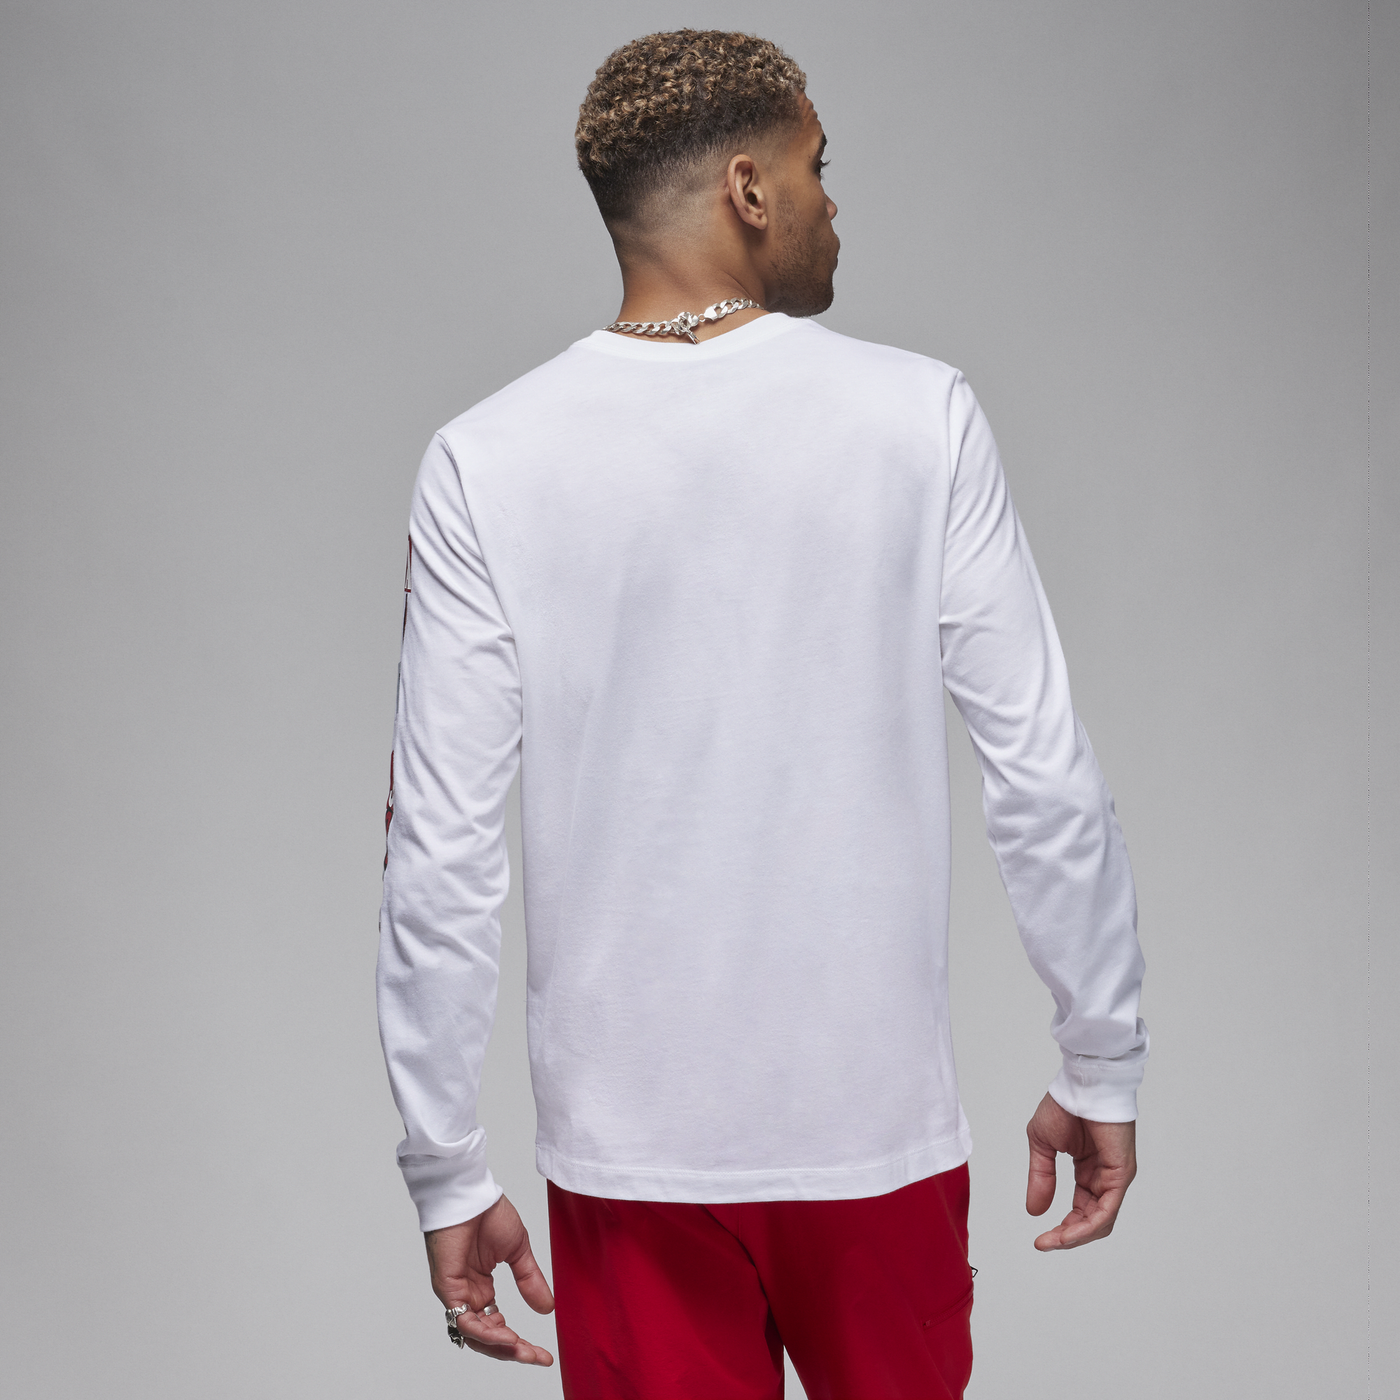 Jordan Brand Men's Graphic Long-Sleeve T-Shirt